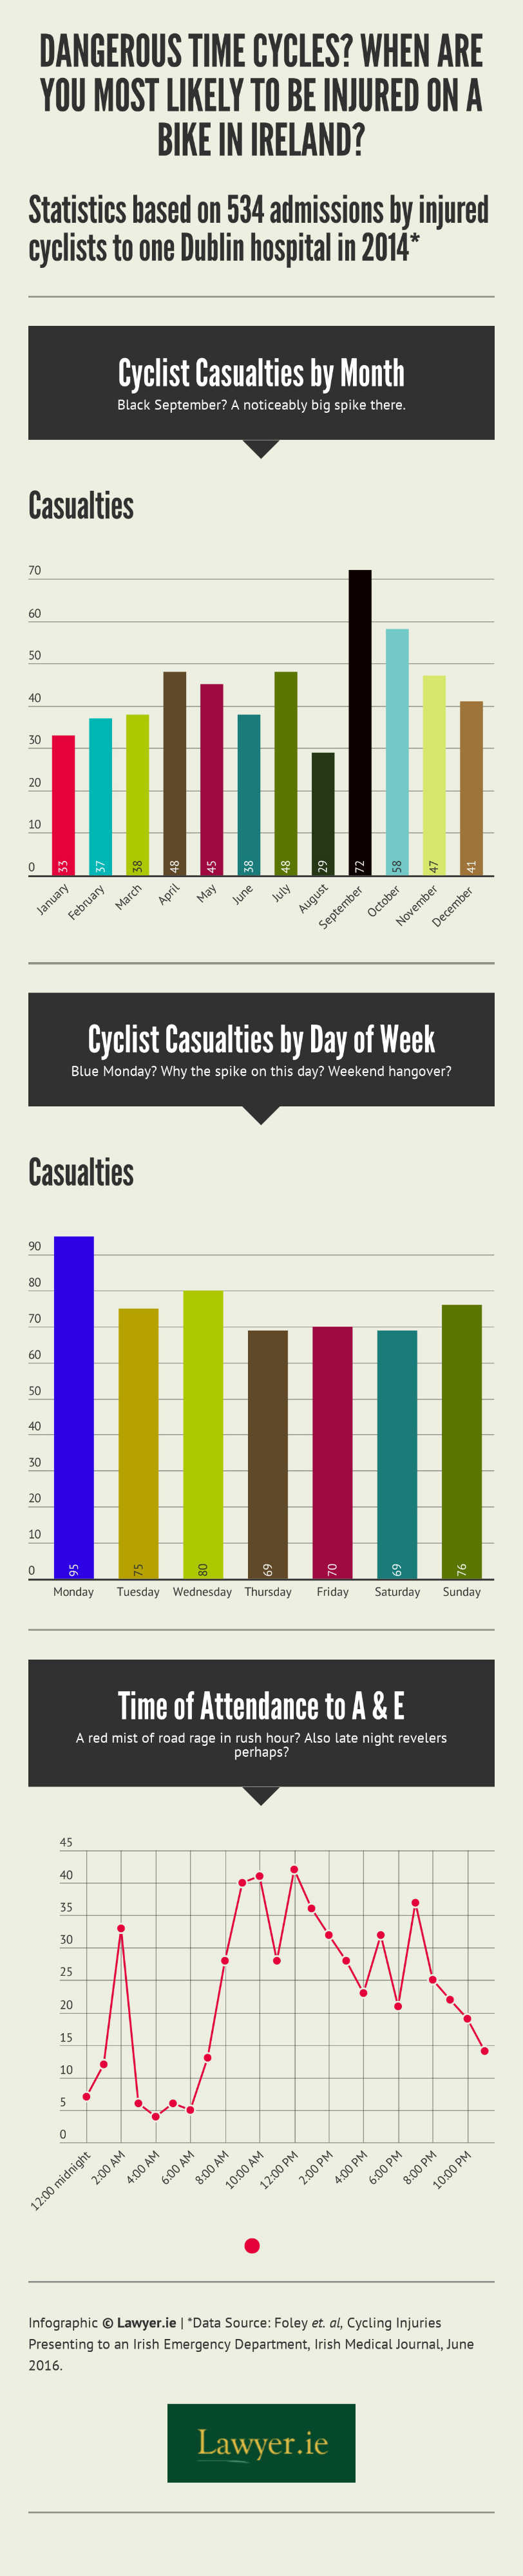 Bicycle Accident Statistics in Ireland